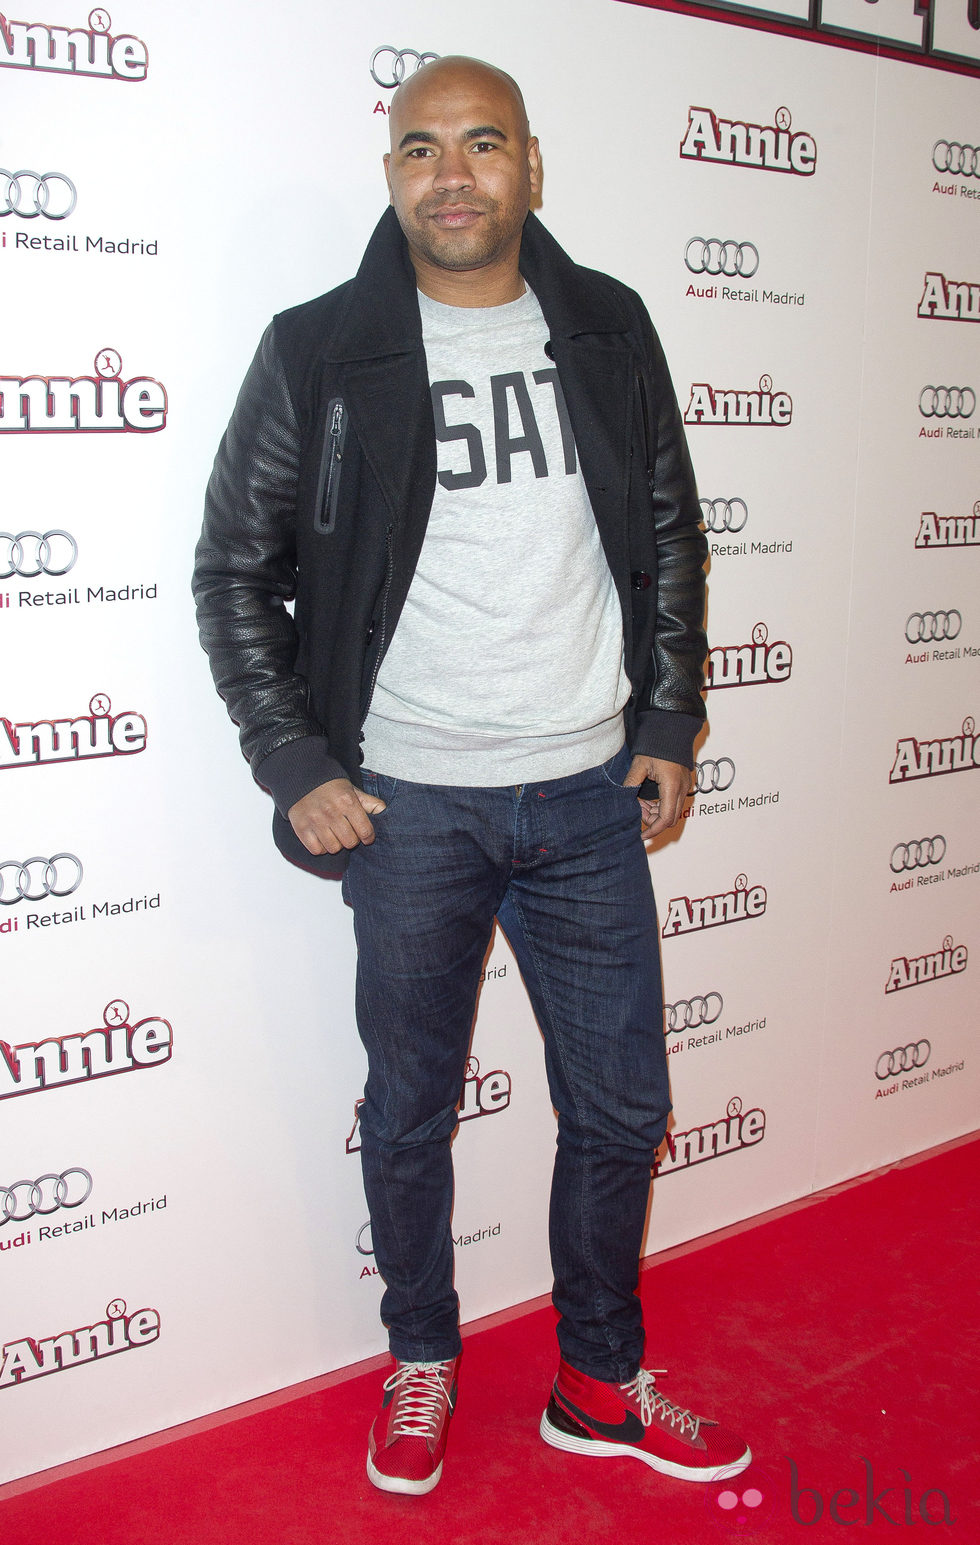 Santiago Zannou en la premiere de 'Annie' en Madrid